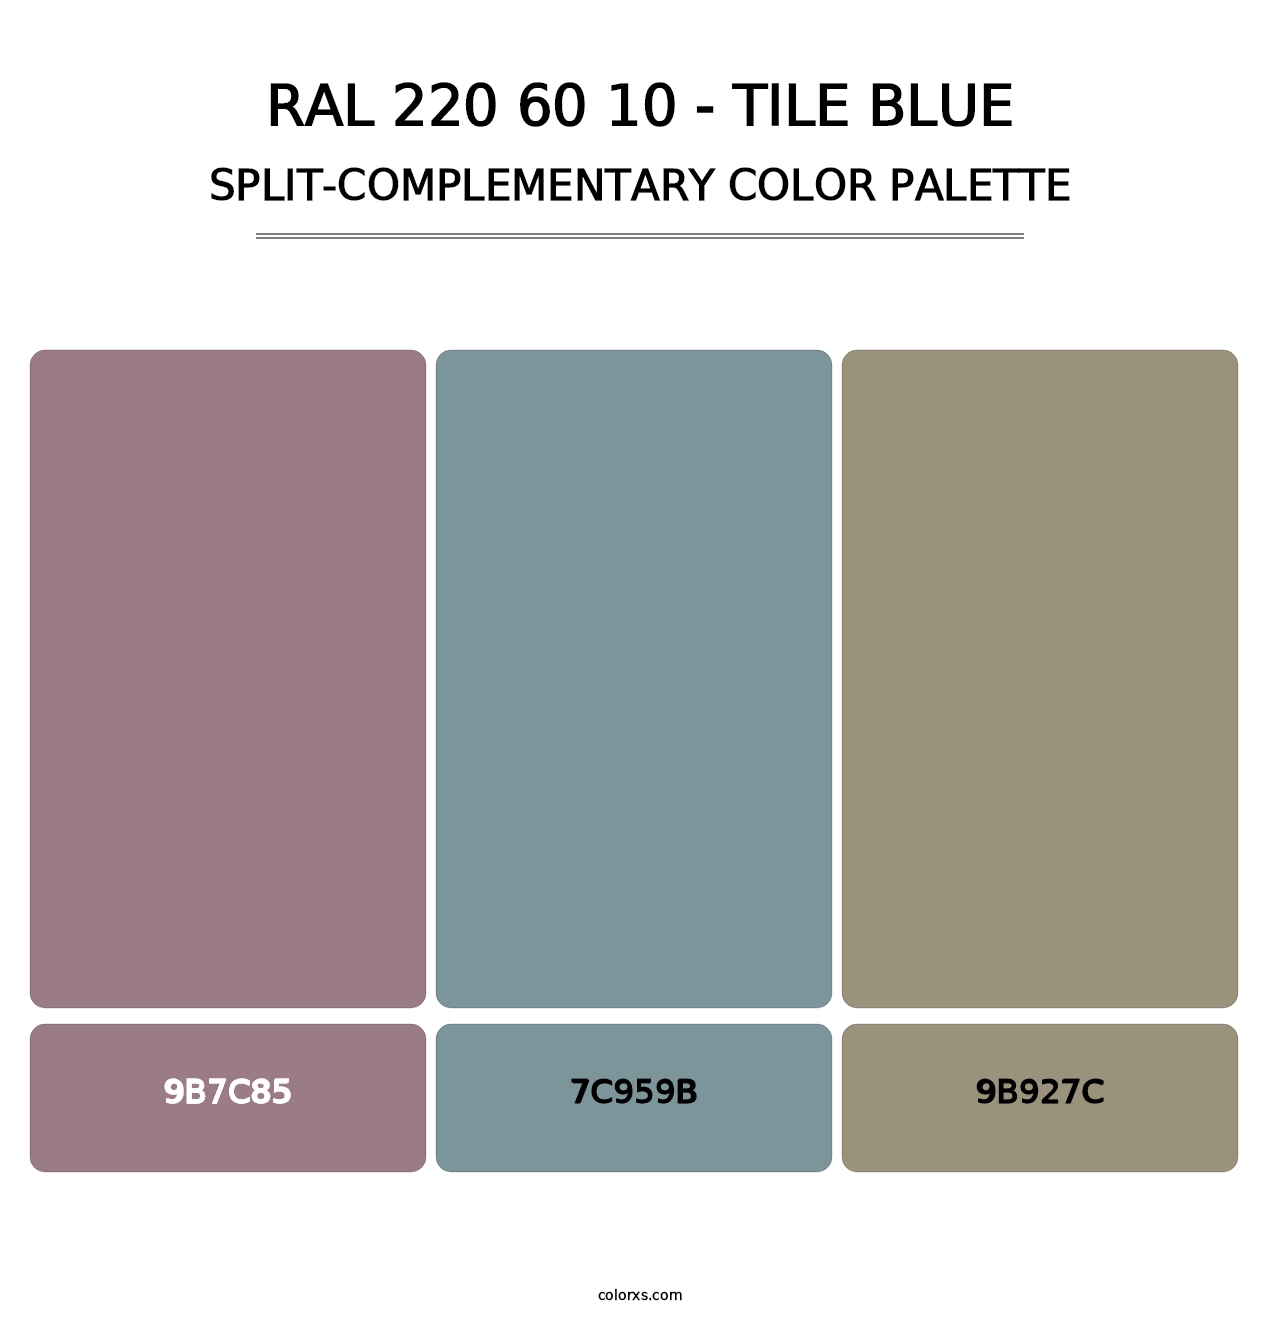 RAL 220 60 10 - Tile Blue - Split-Complementary Color Palette